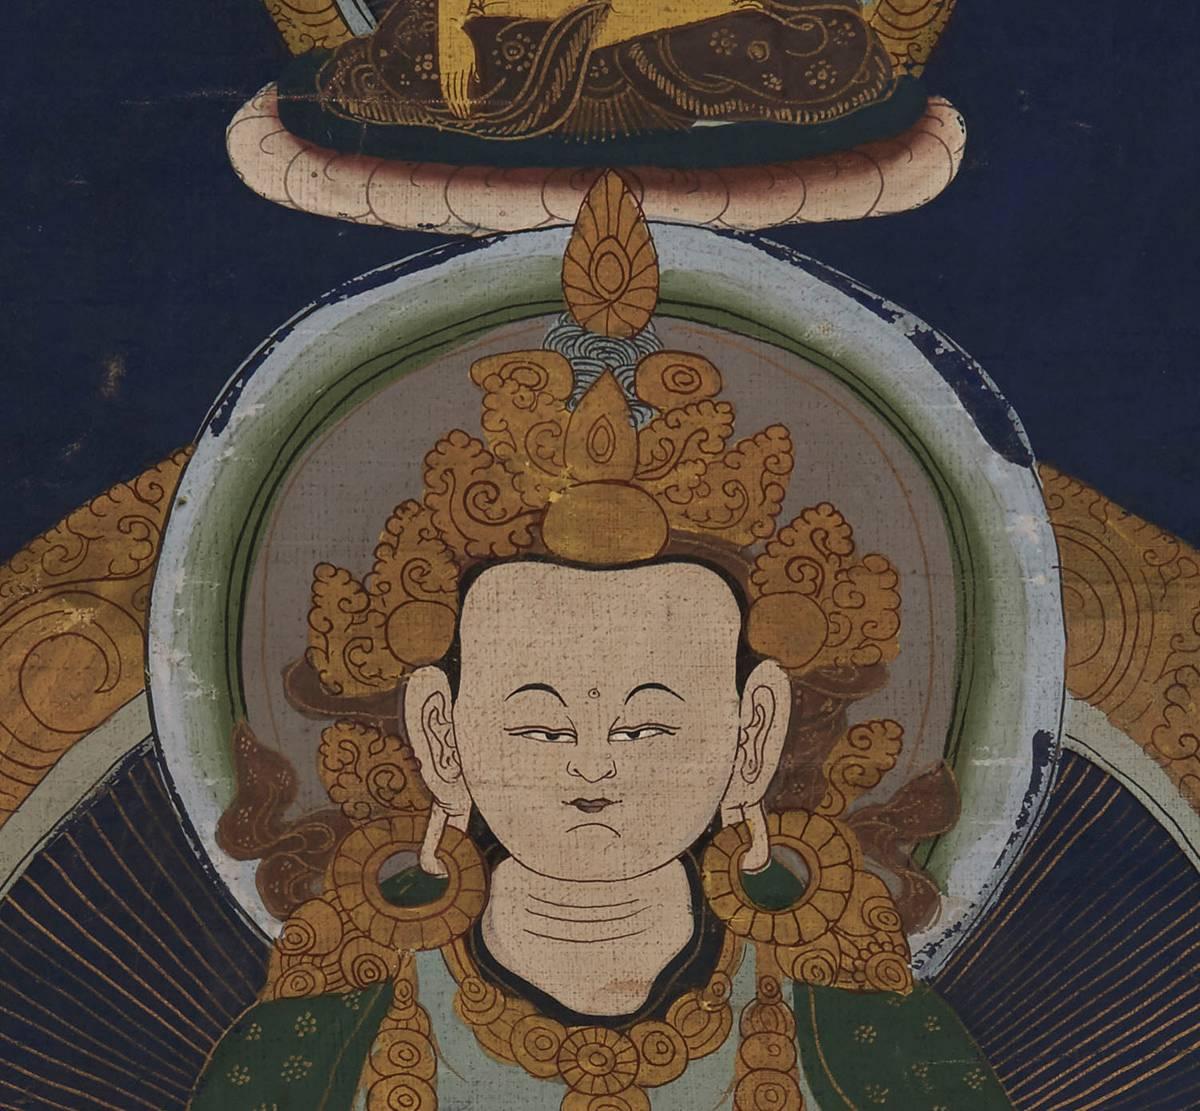 East Asian Antique Chinese/Tibetan Thanka with Buddha & Gods, 19th Century